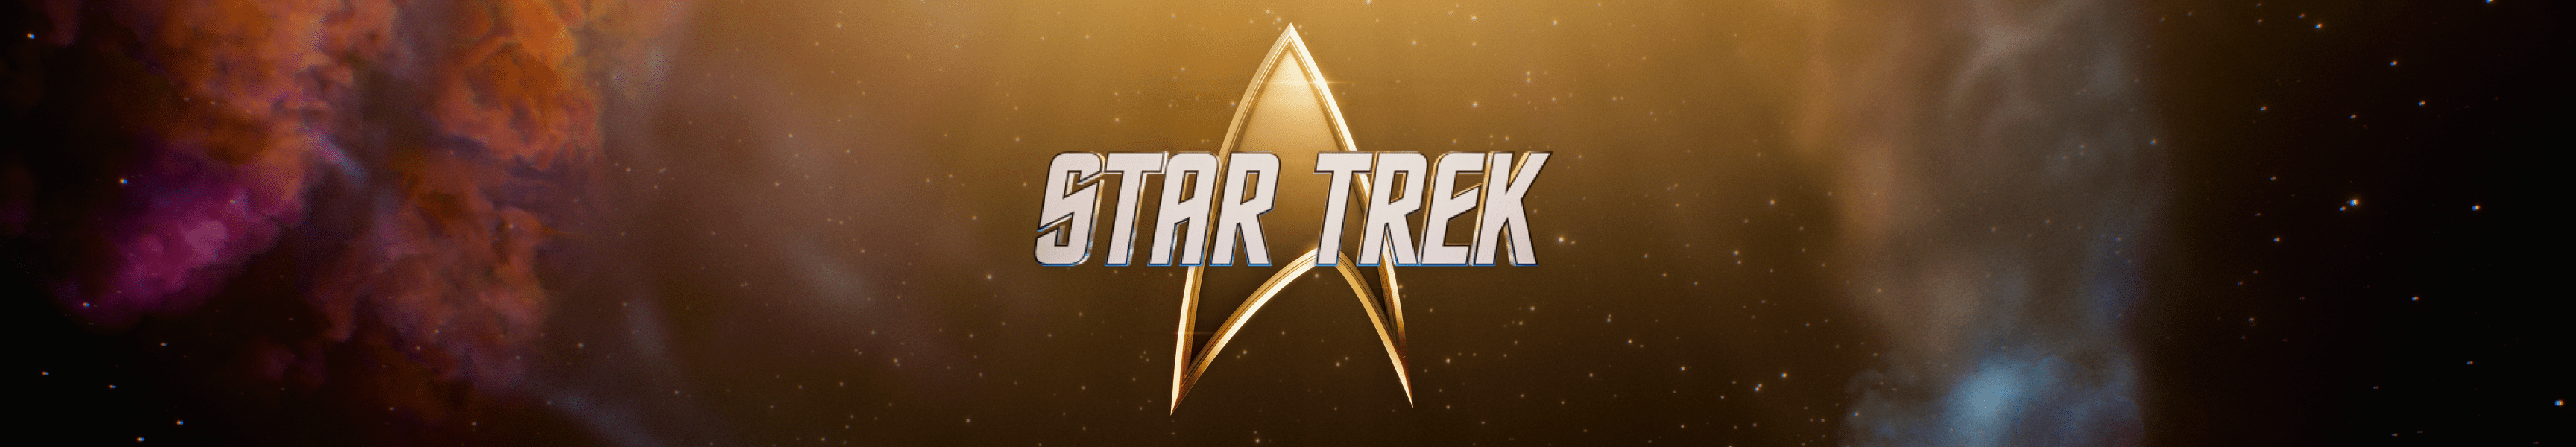 Star Trek Top Fiestas Regalos